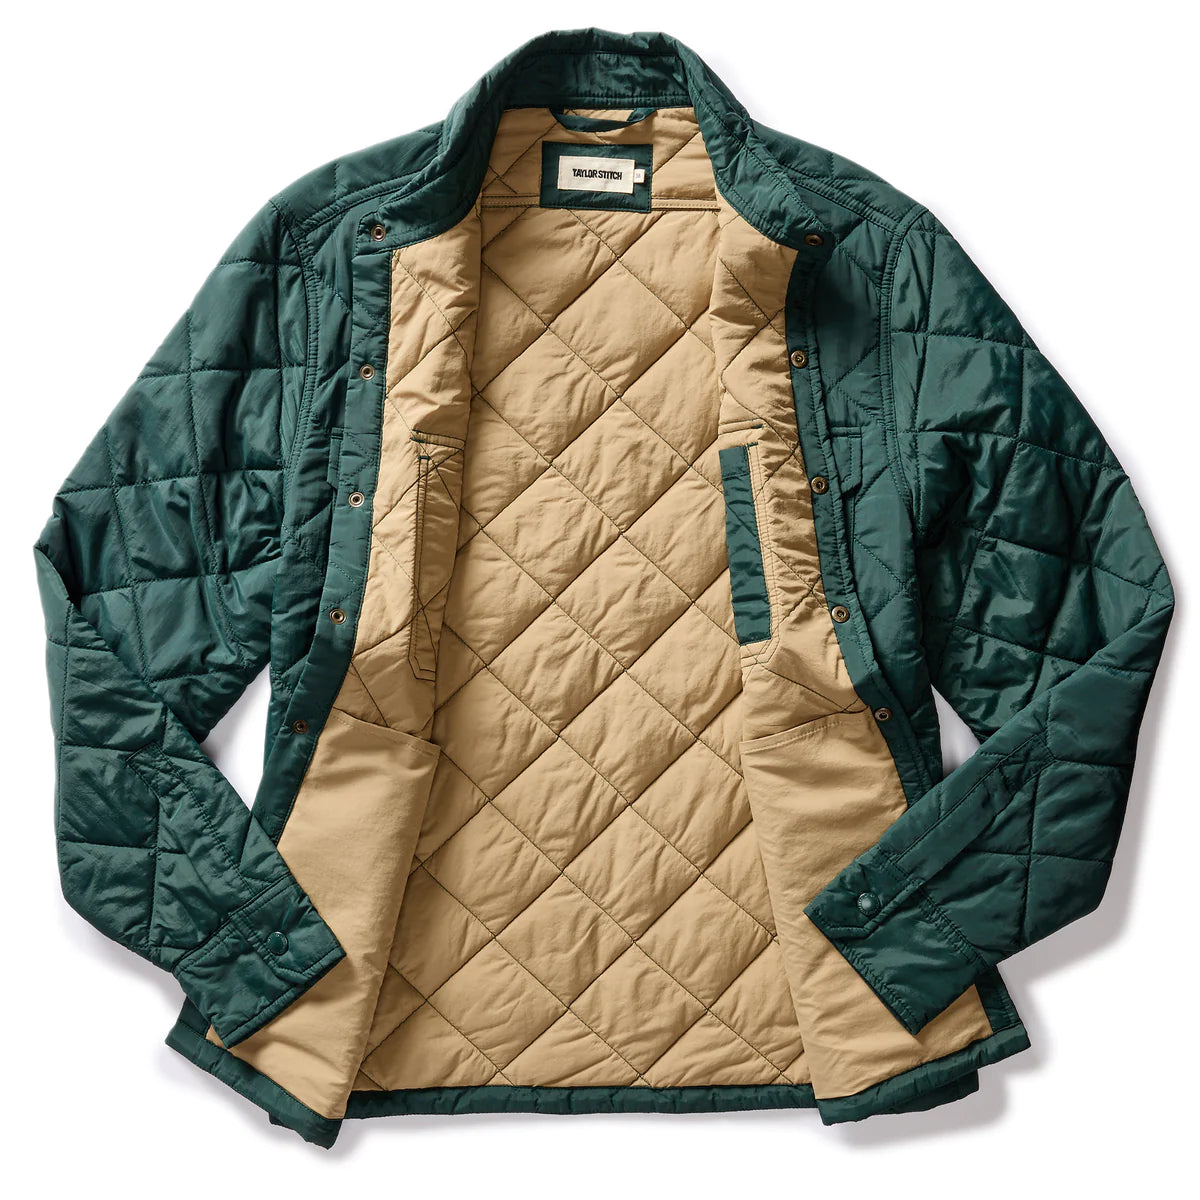 Taylor Stitch - Miller Shirt Jacket in Conifer